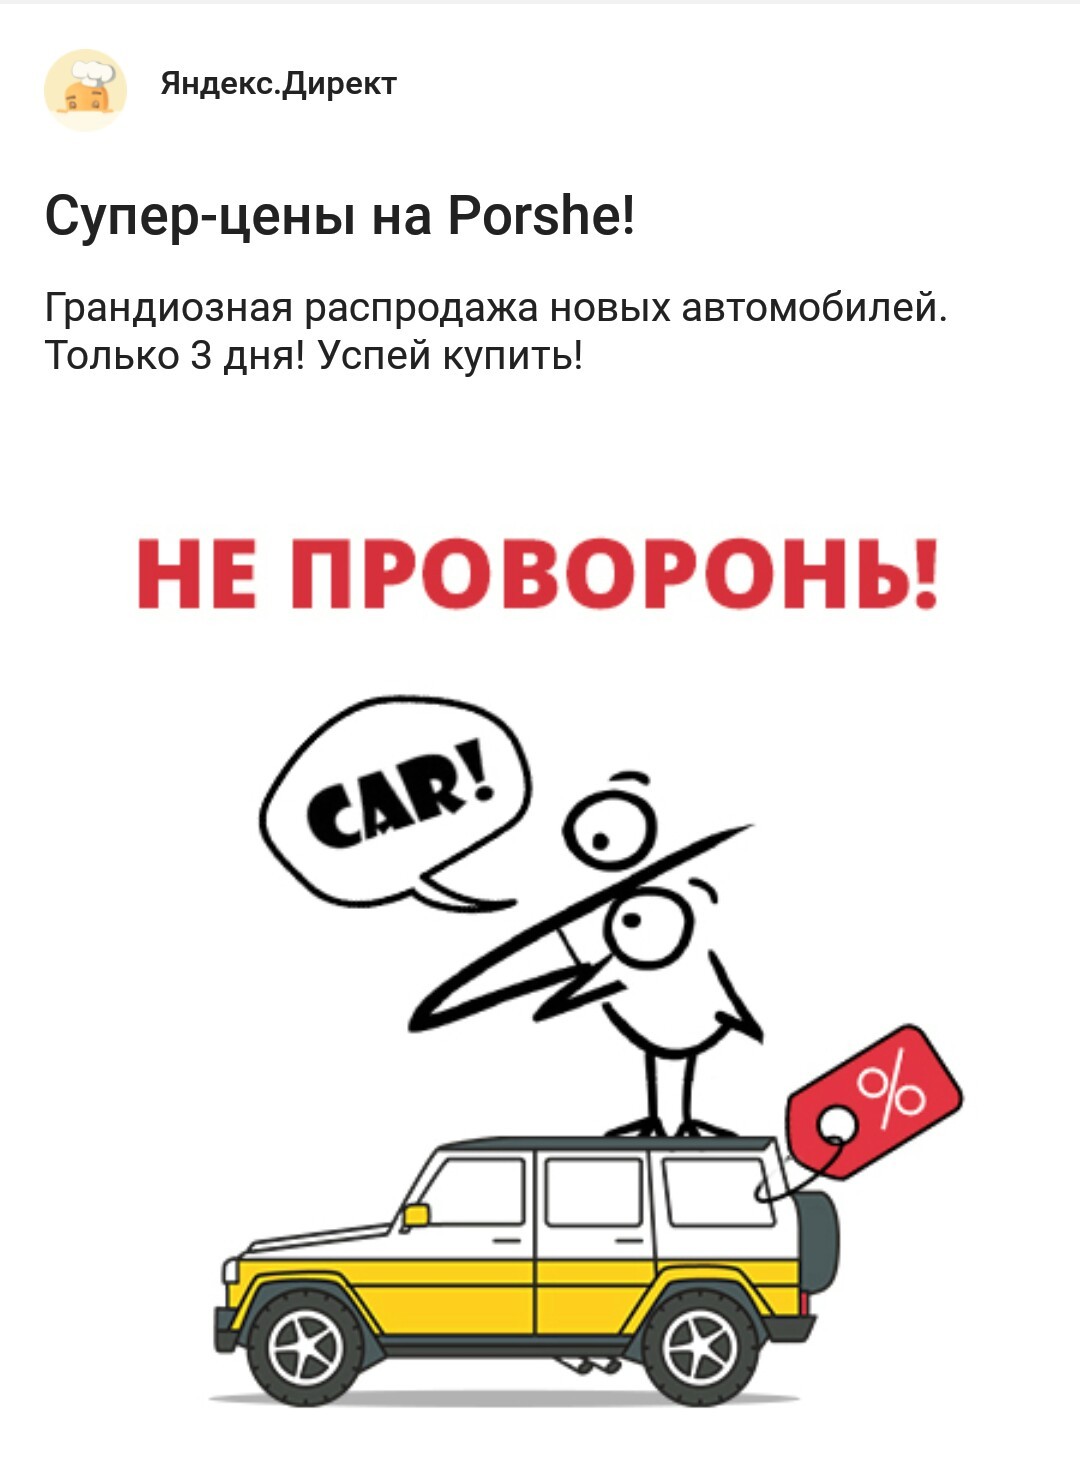 Contextual advertising. - My, contextual advertising, Yandex.